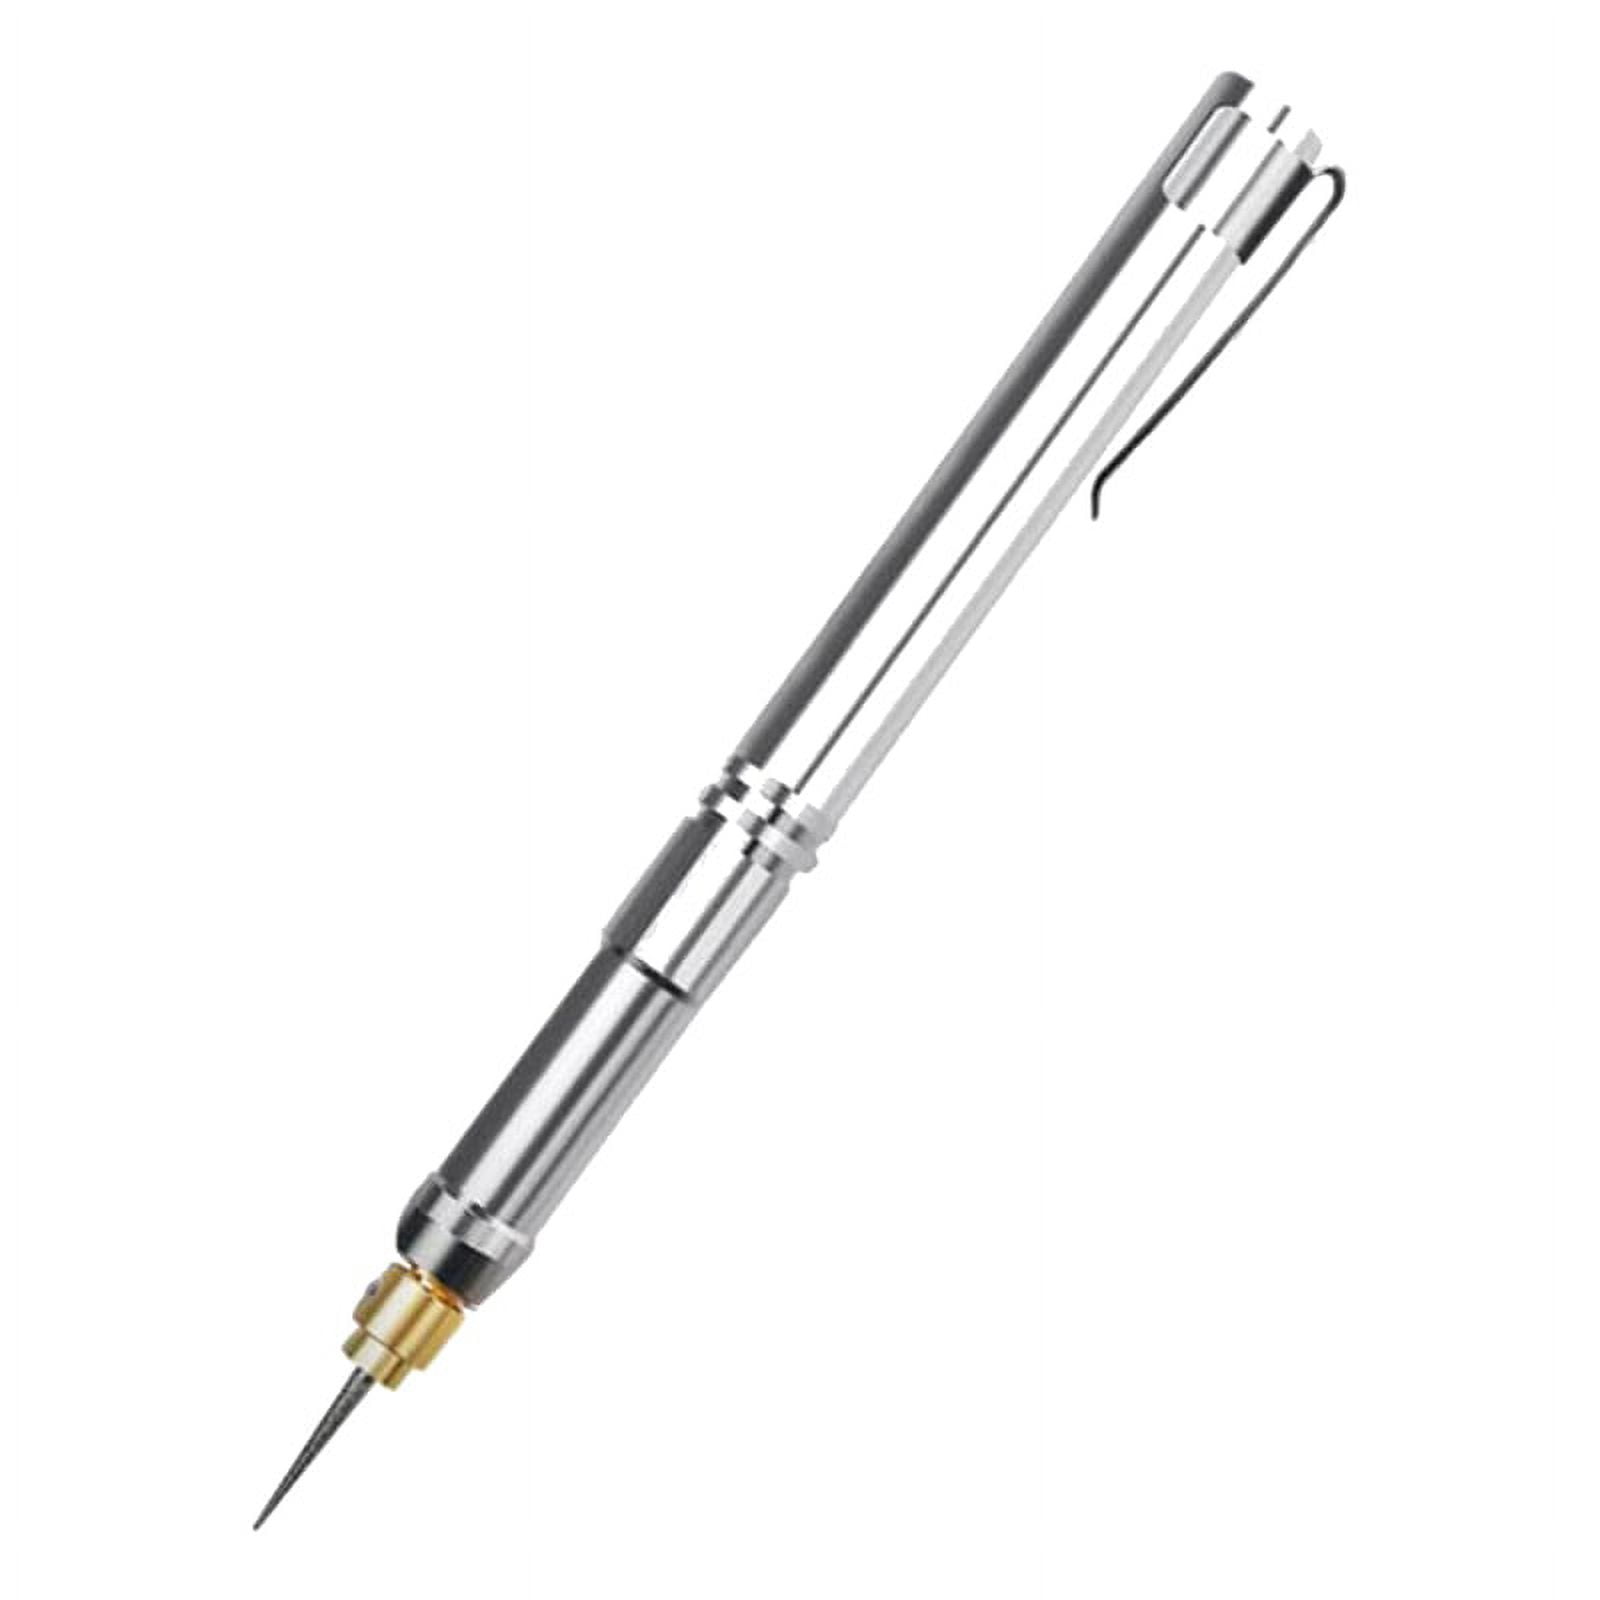 3.7V Electric Engraving Pen Kit Cordless Rechargeable Engraver